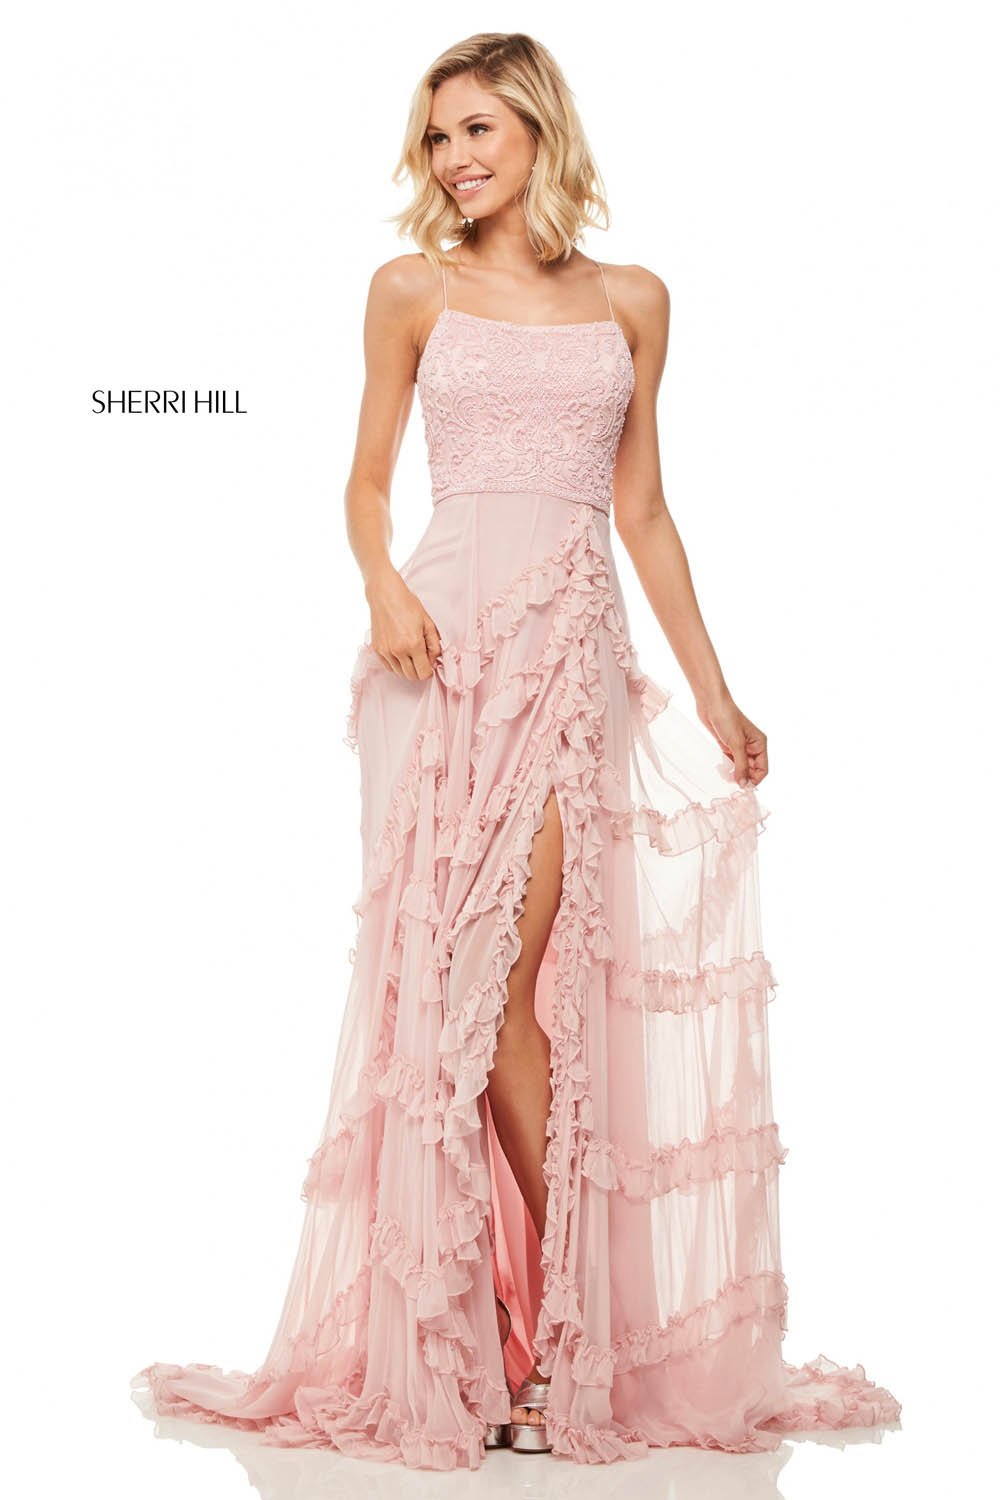 sherri hill prom dresses pink